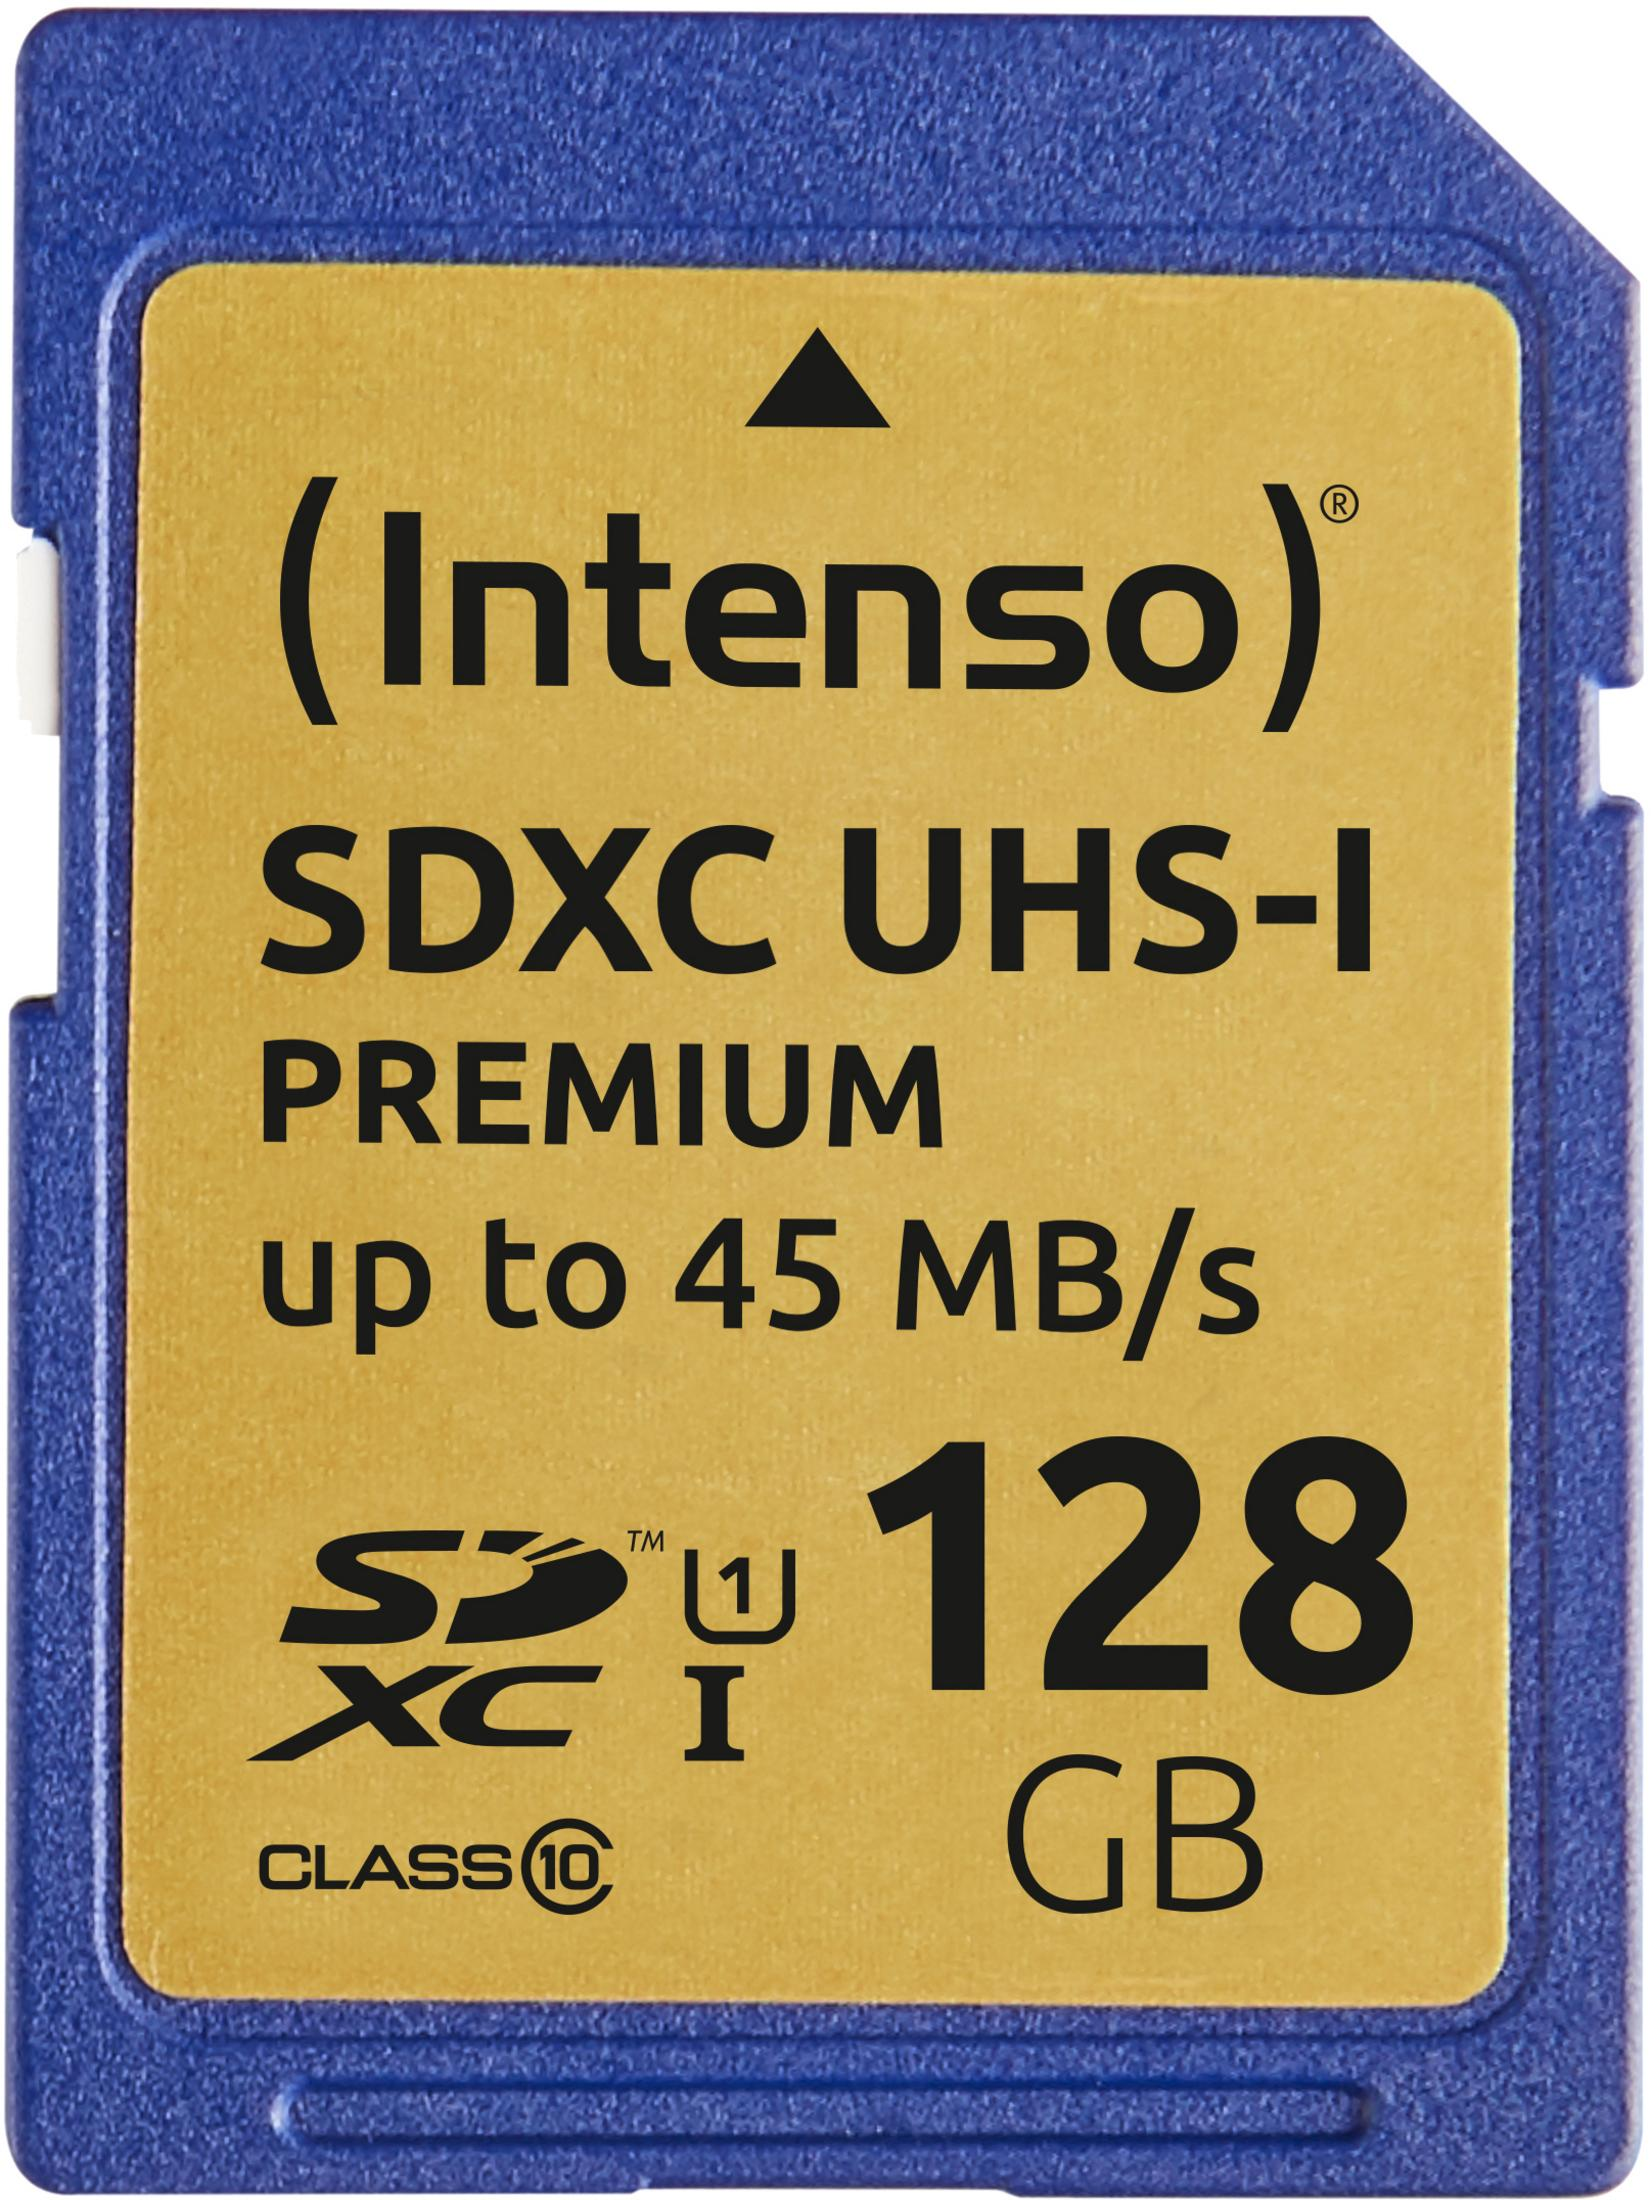 GB, Speicherkarte, INTENSO 10 UHS-1, 128 MB/s 3421491 SDHC SDXC 128GB